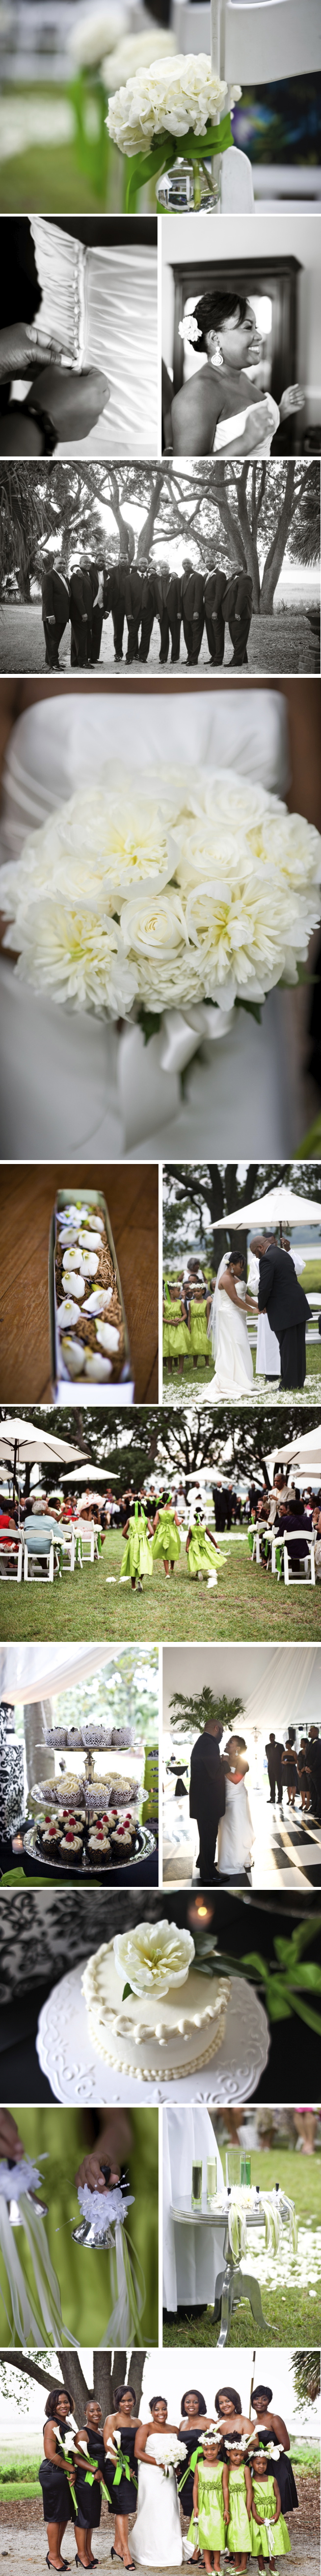 Wedding blogs | wedding pictures 